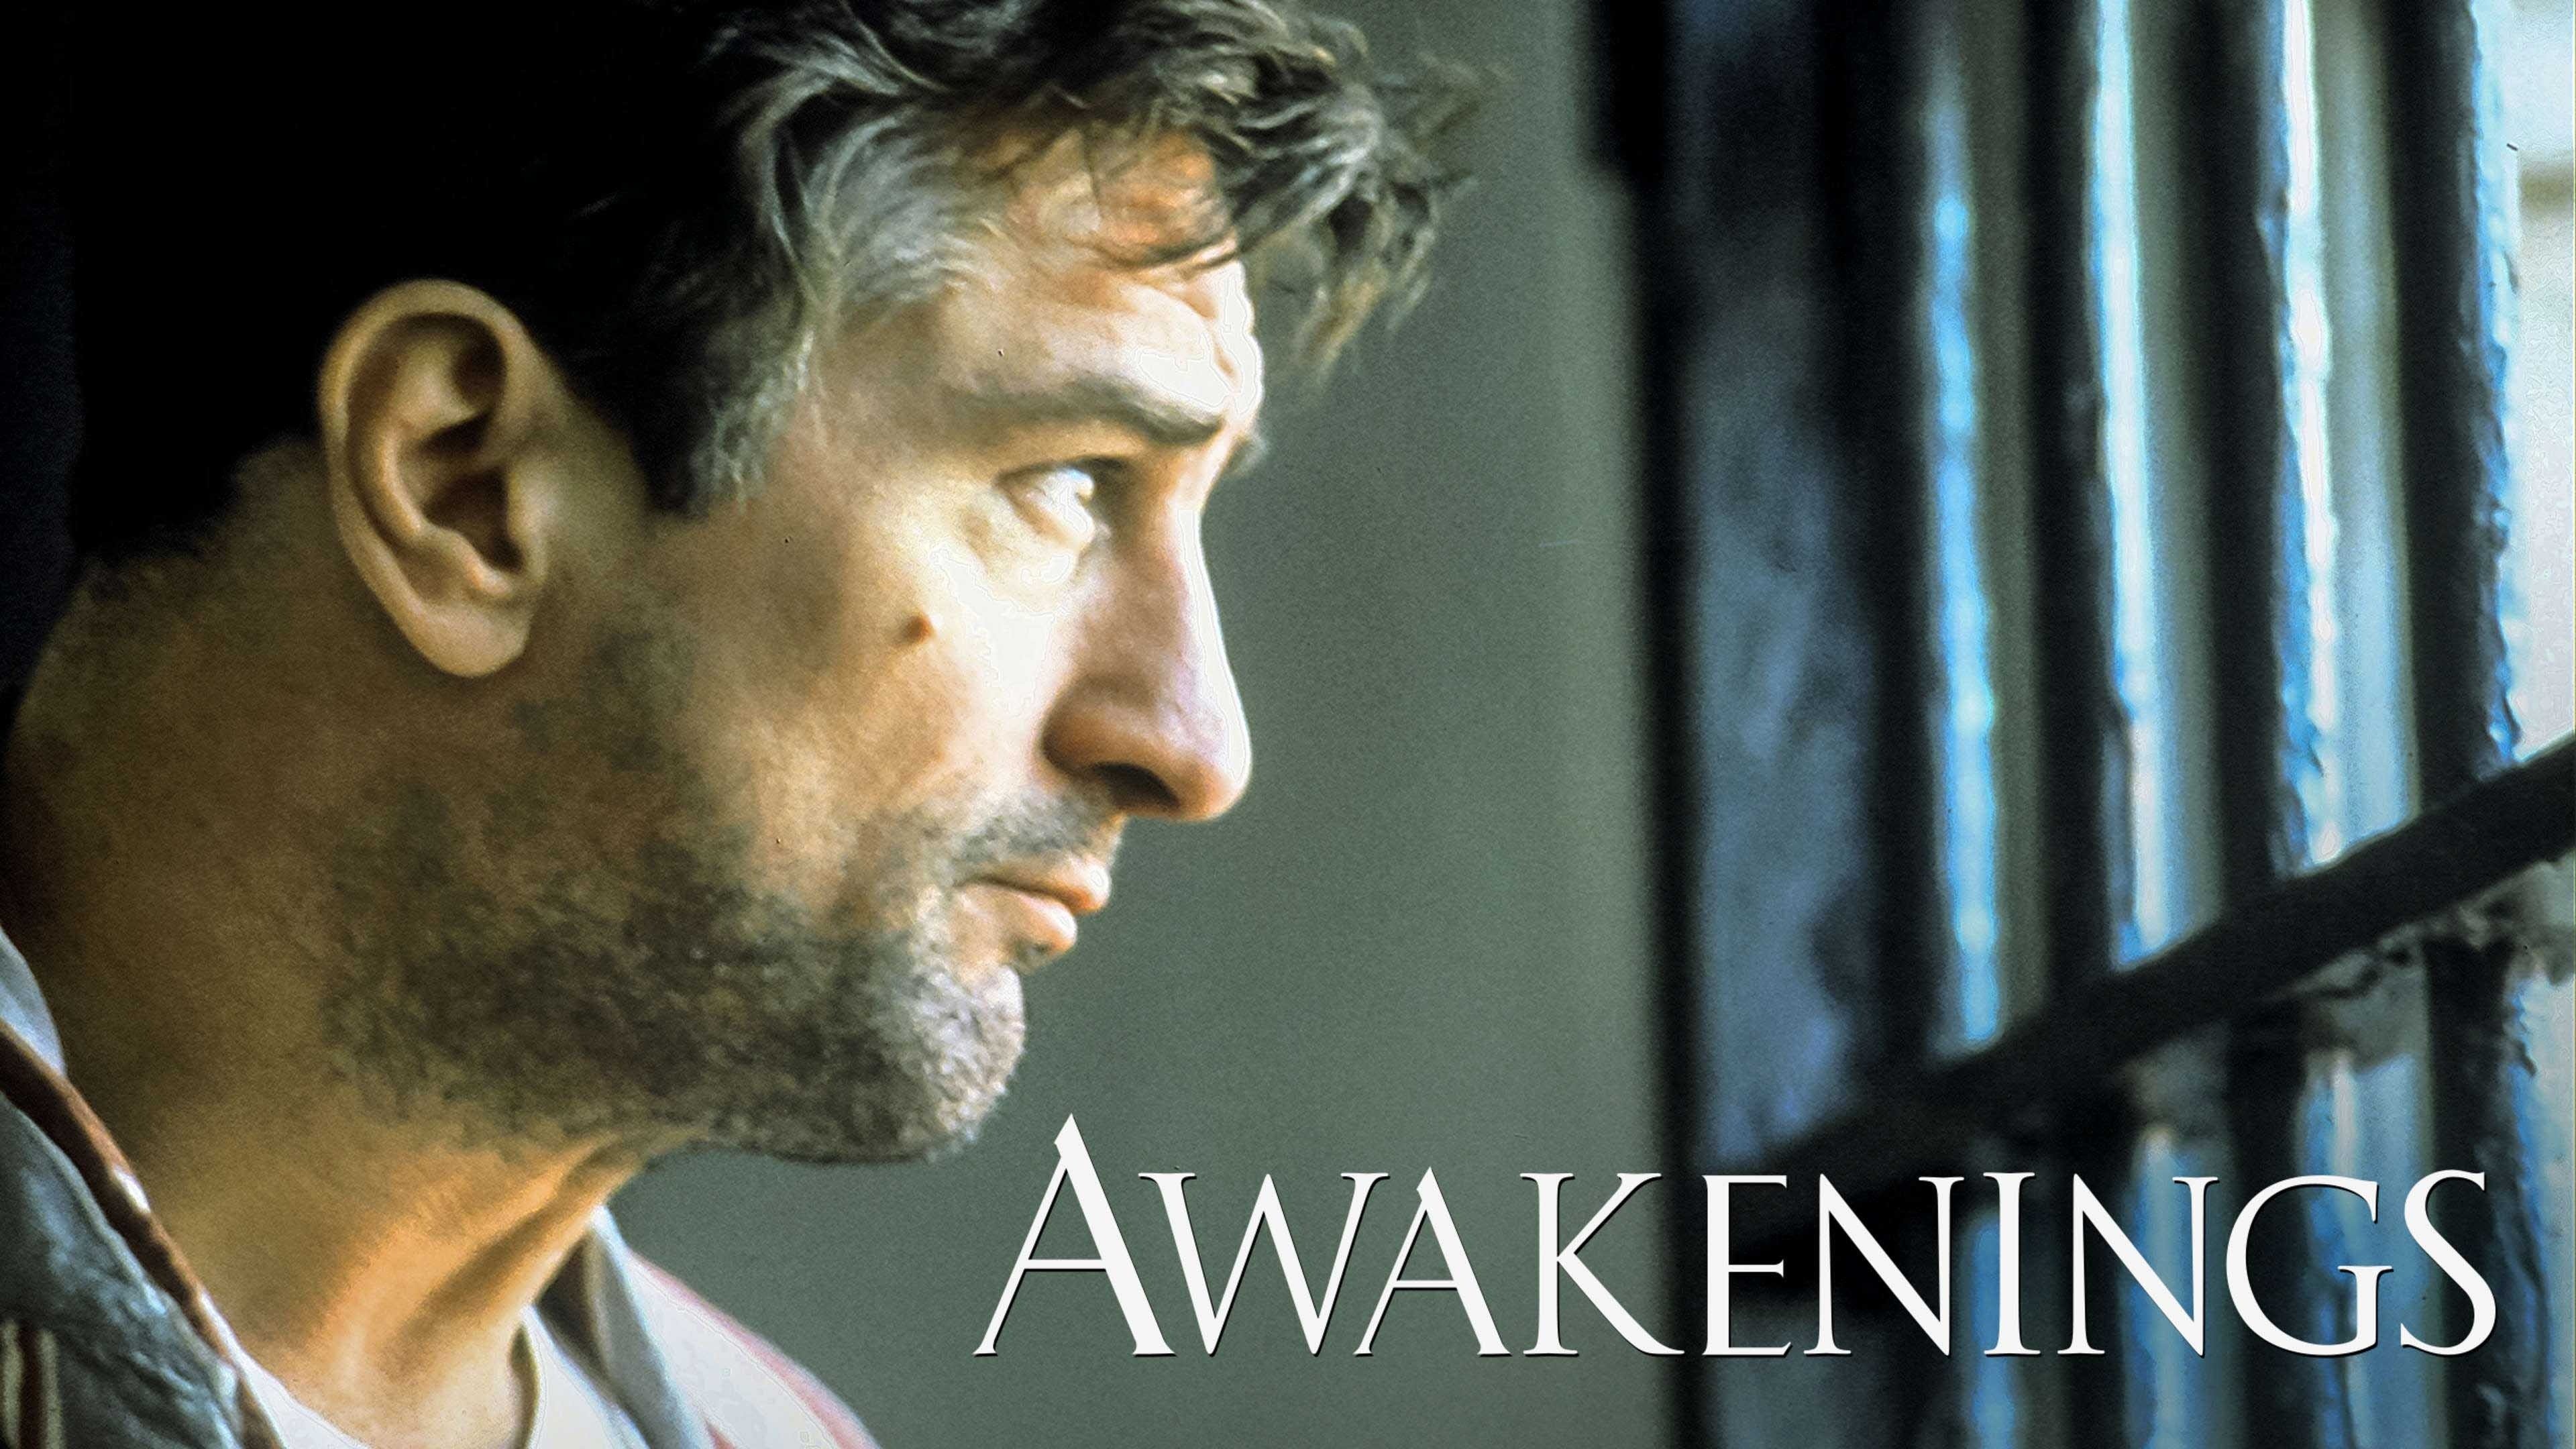 Awakenings movie, Full movie online, Plex streaming service, 3840x2160 4K Desktop